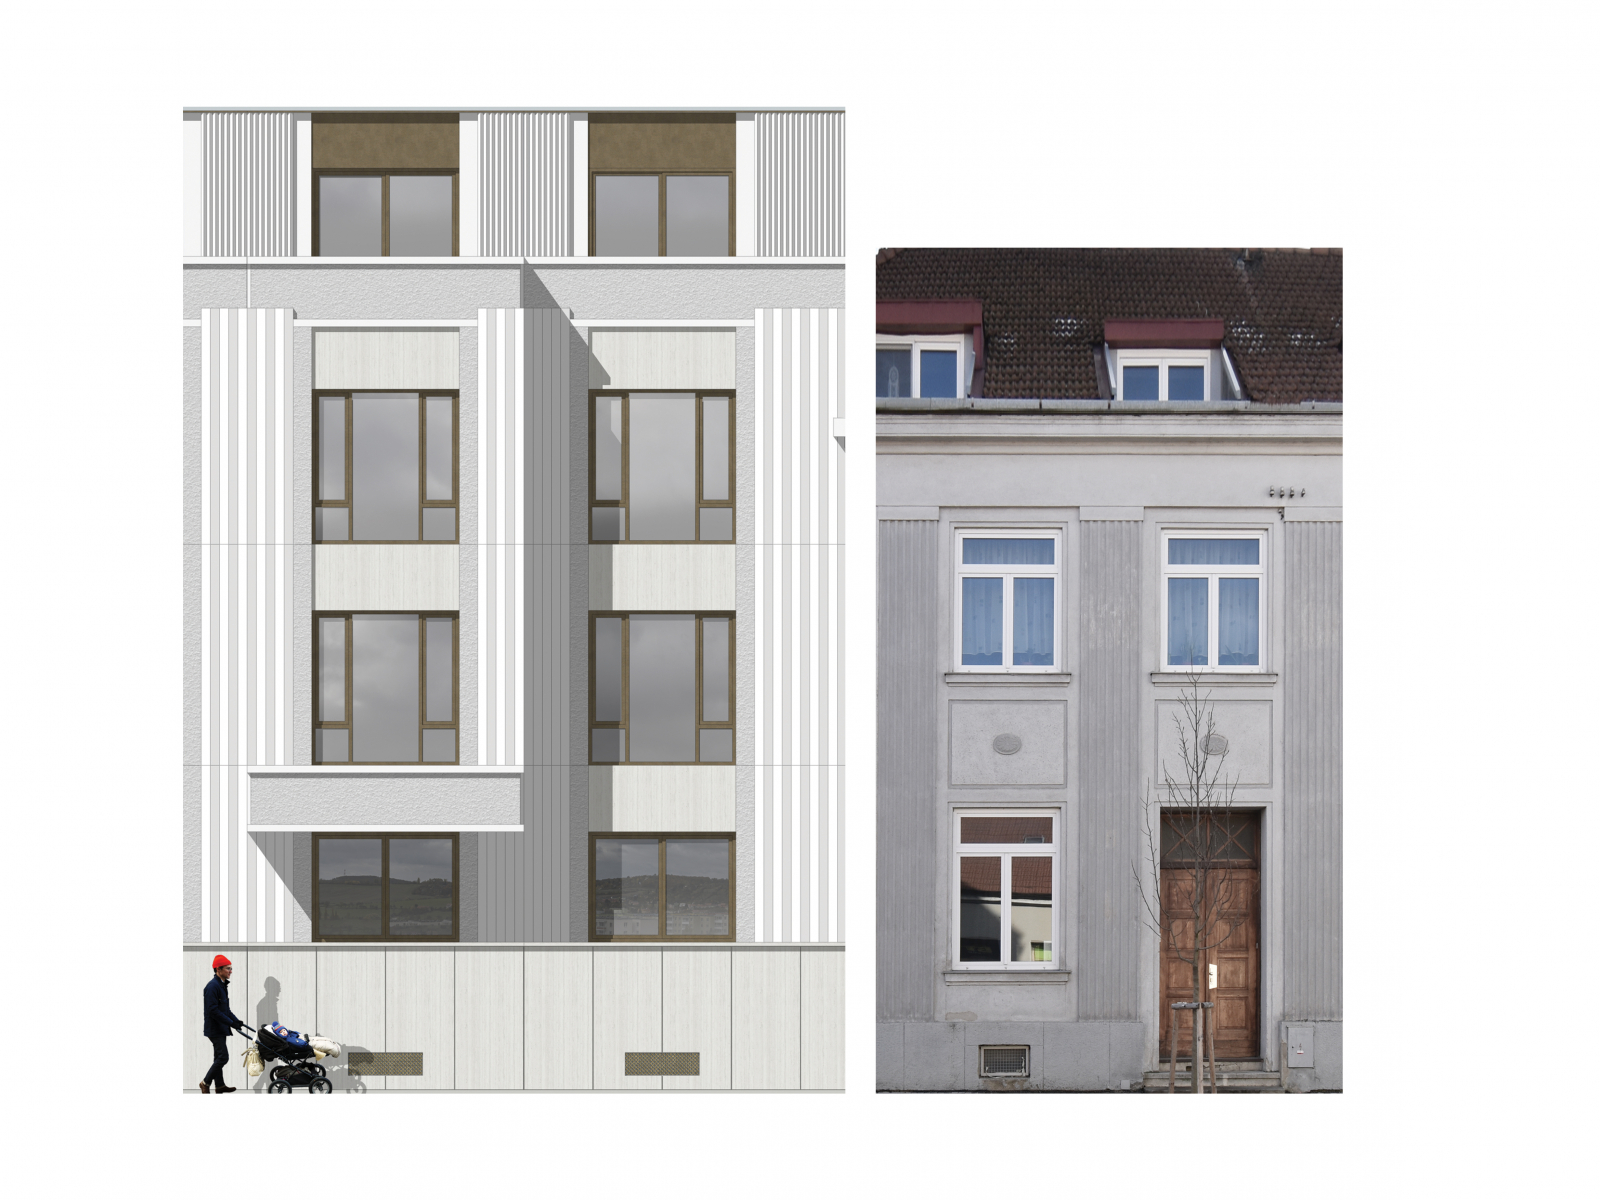 Rental apartment building | Prostějov